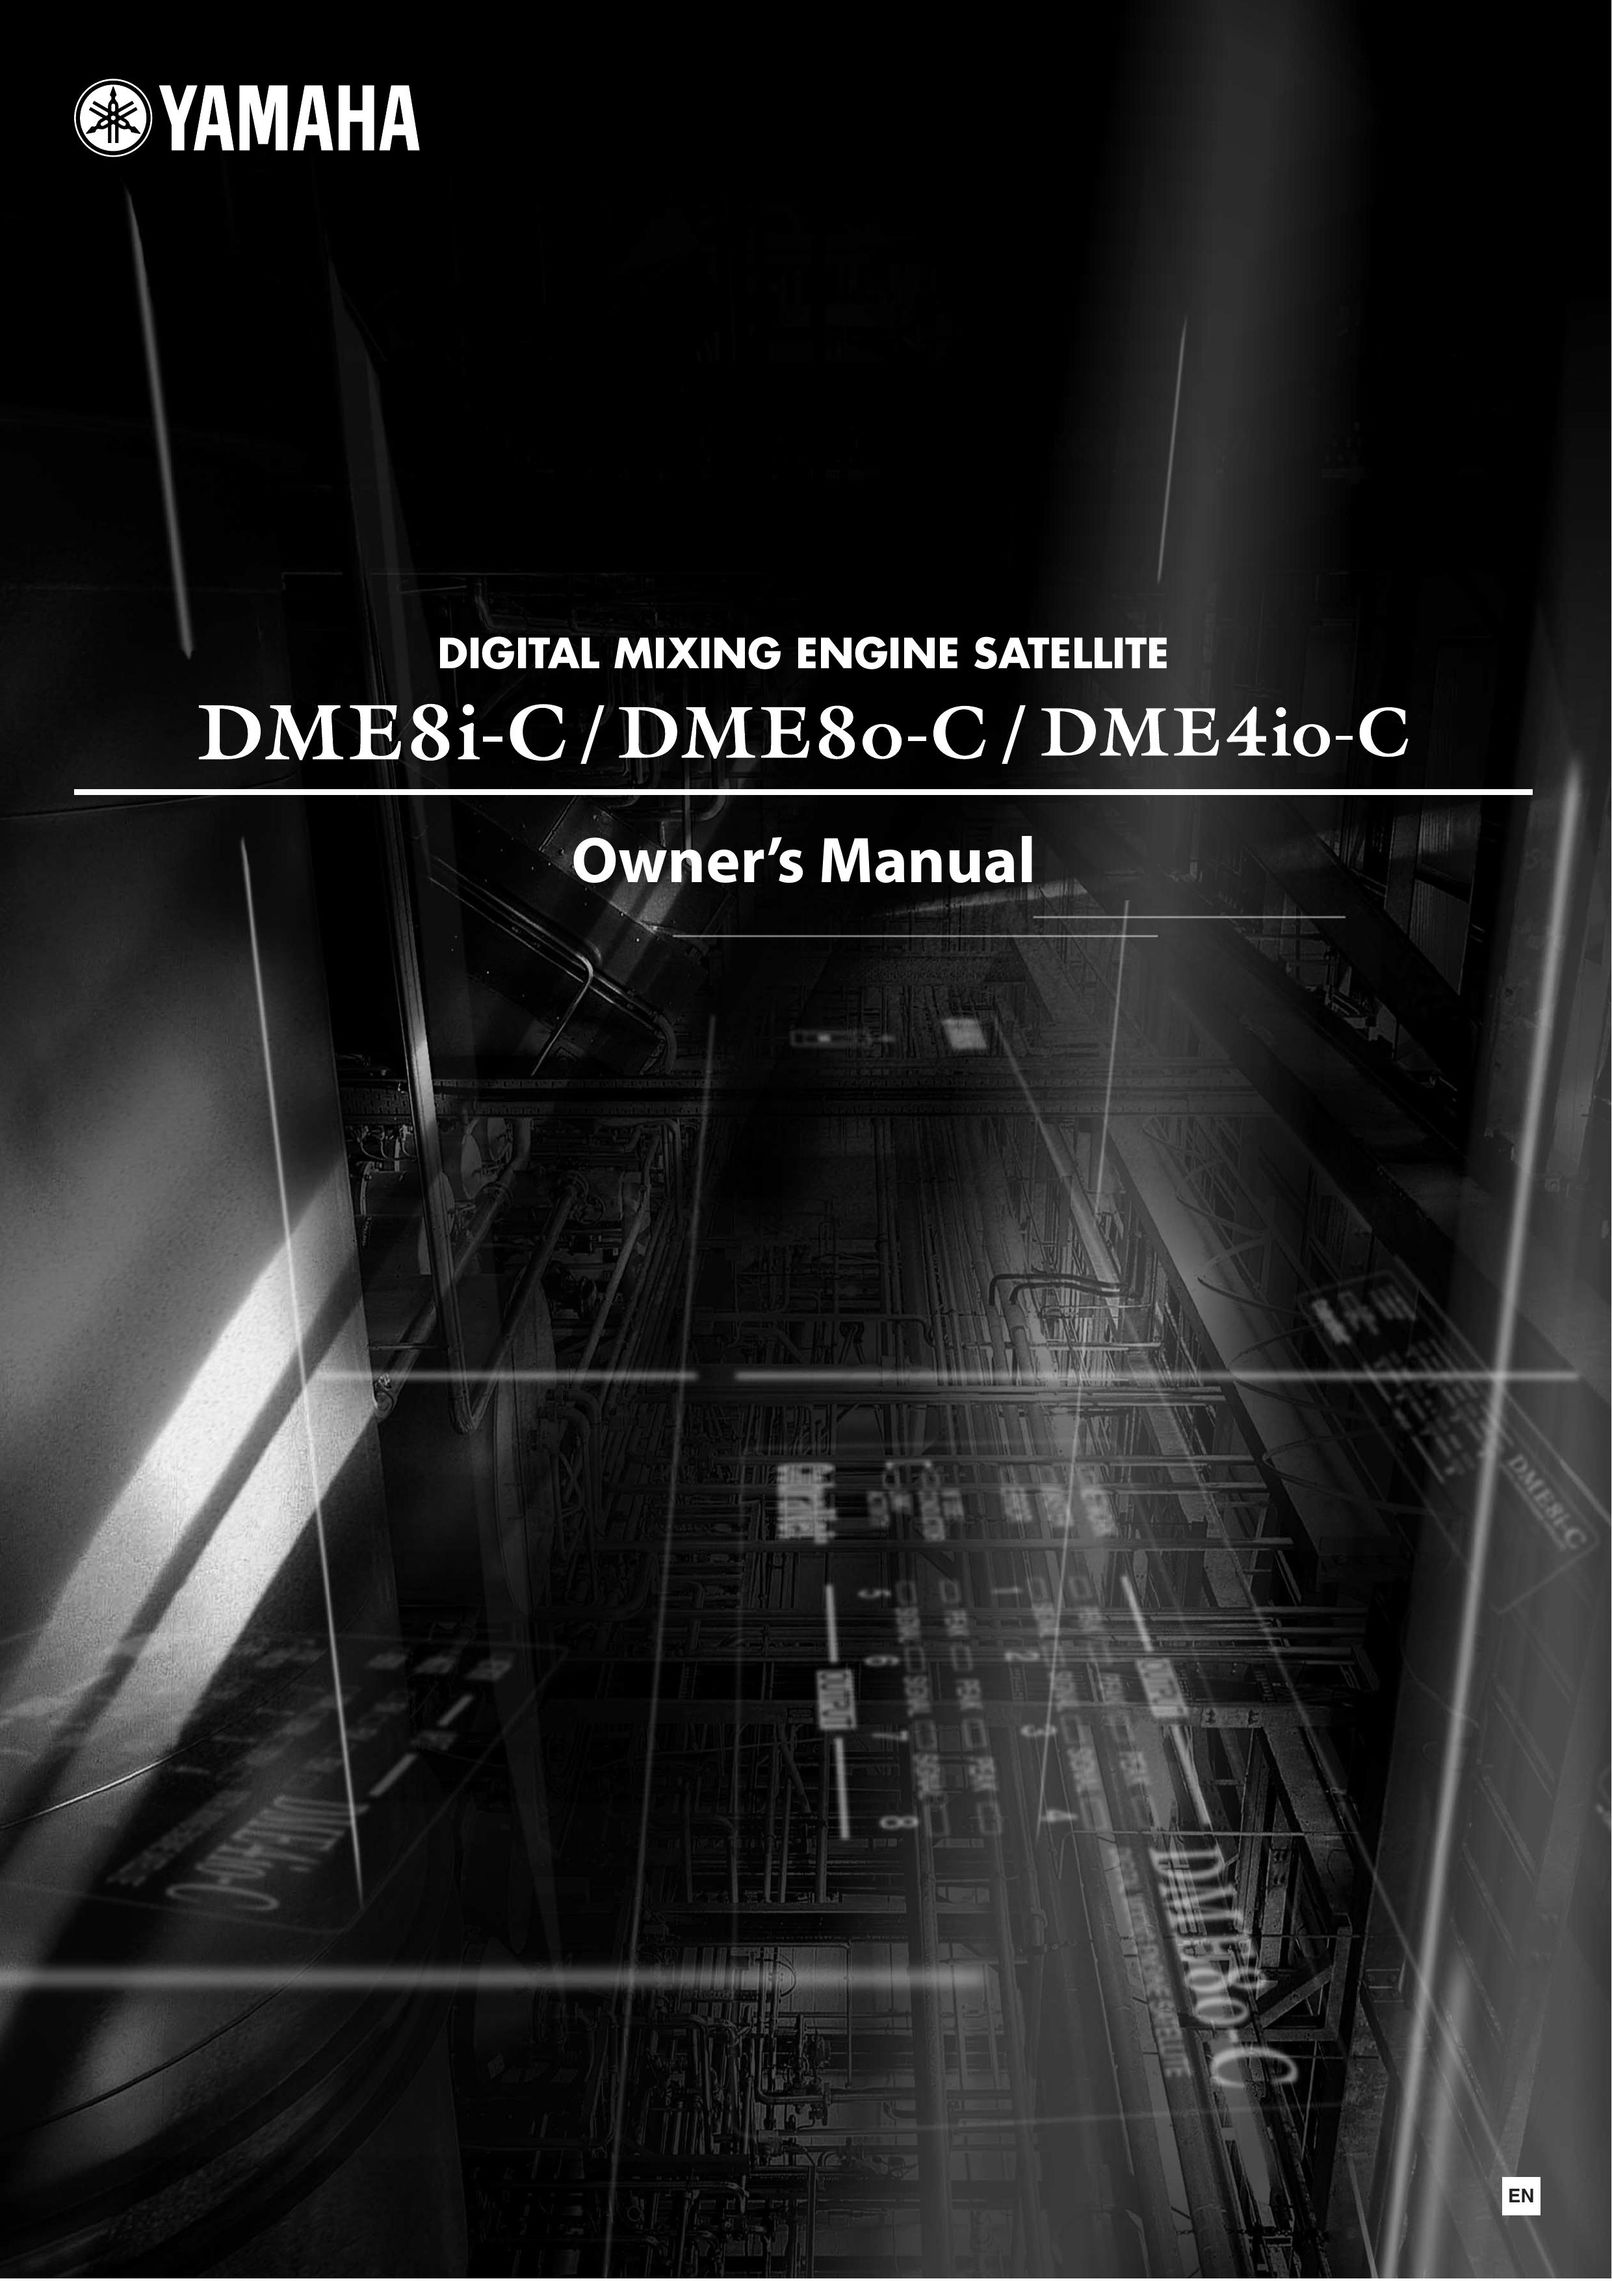 Yamaha DME8i-C Satellite TV System User Manual